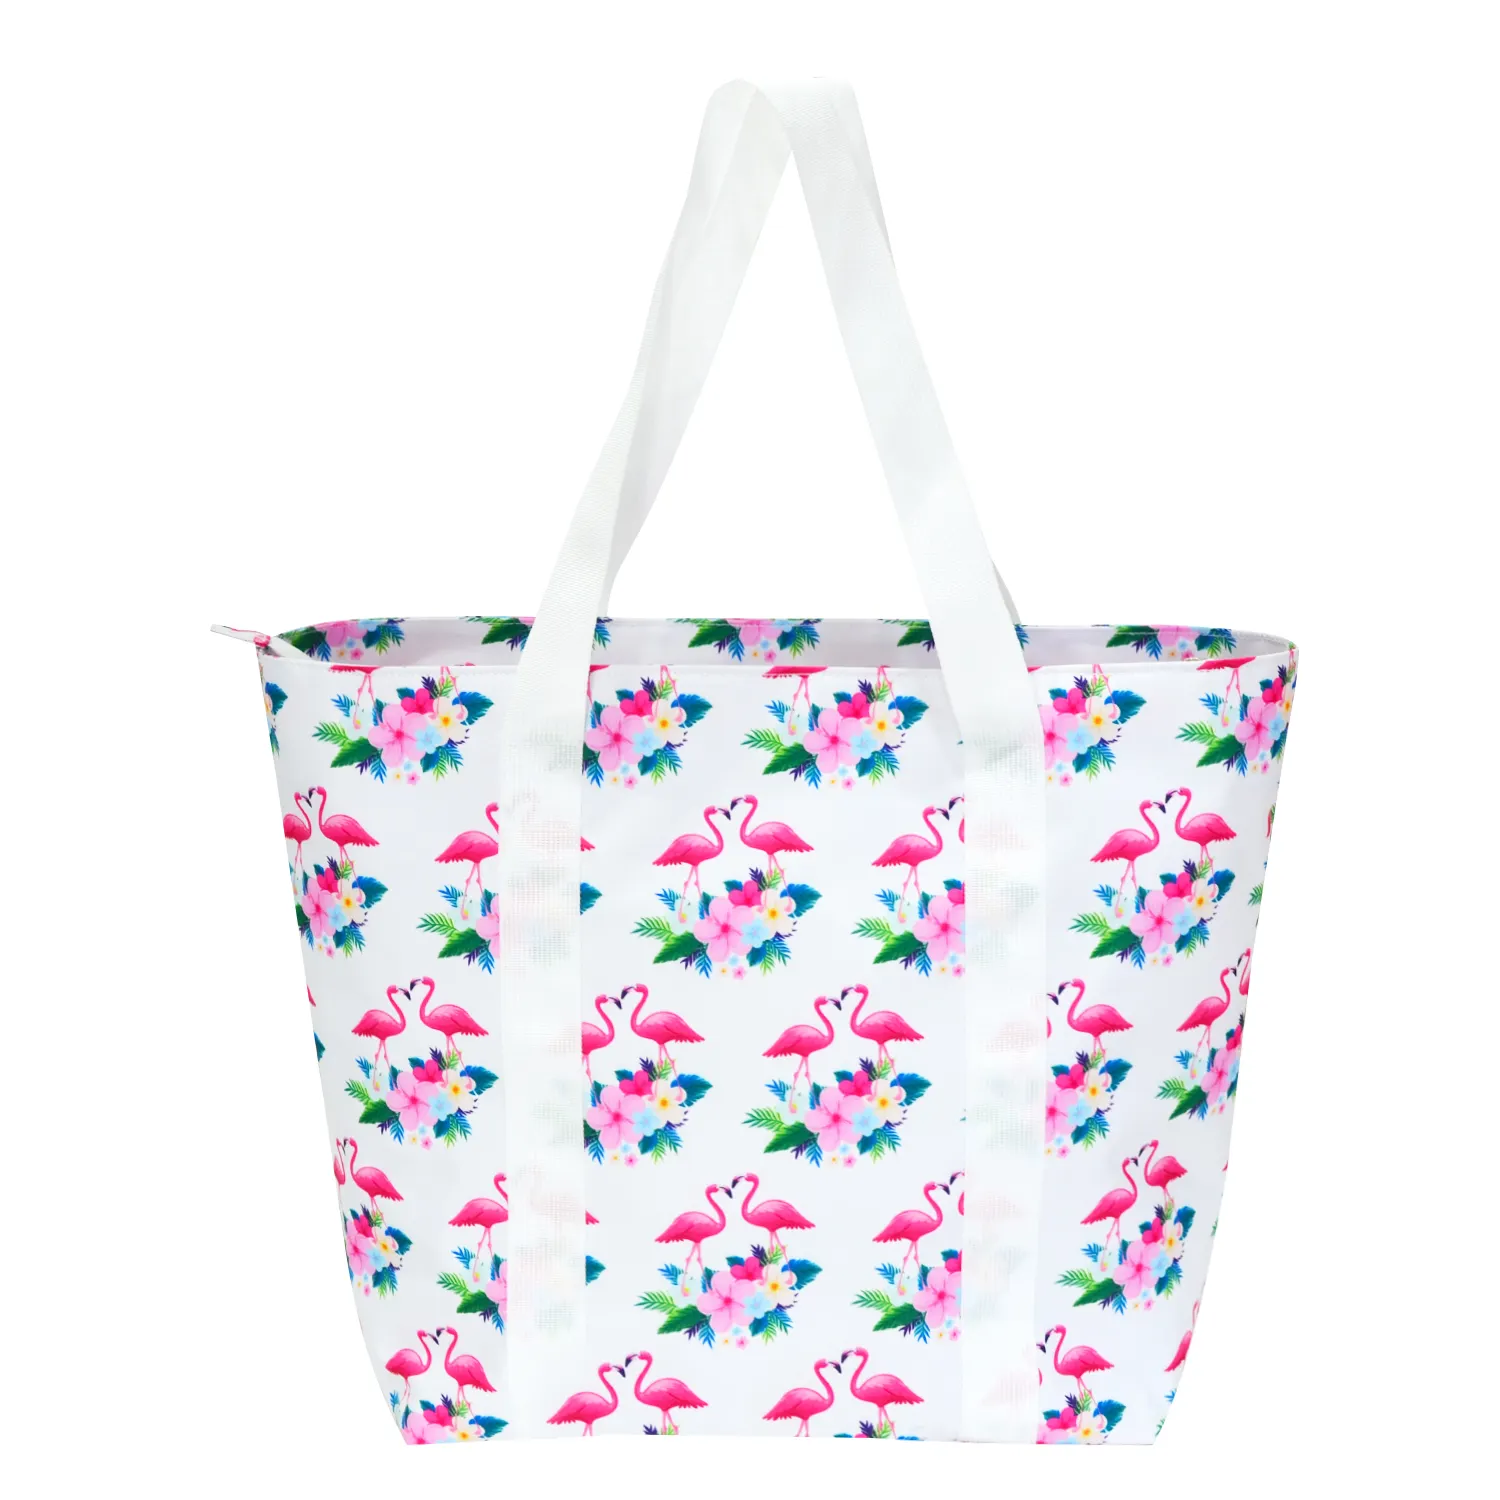 Luxury fashion beach grocery shopping waterproof lady women's handbag tote bags with custom printed logo